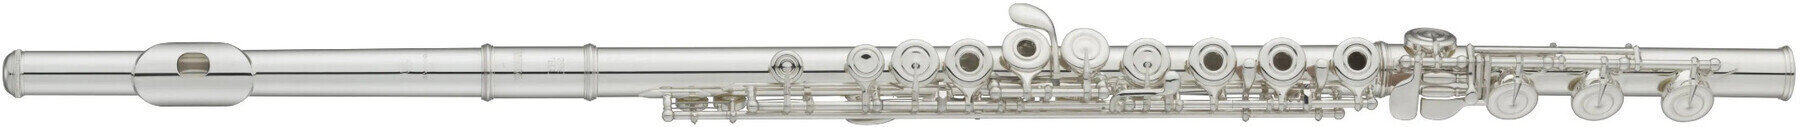 Concert flute Avanti 2000CEA Concert flute